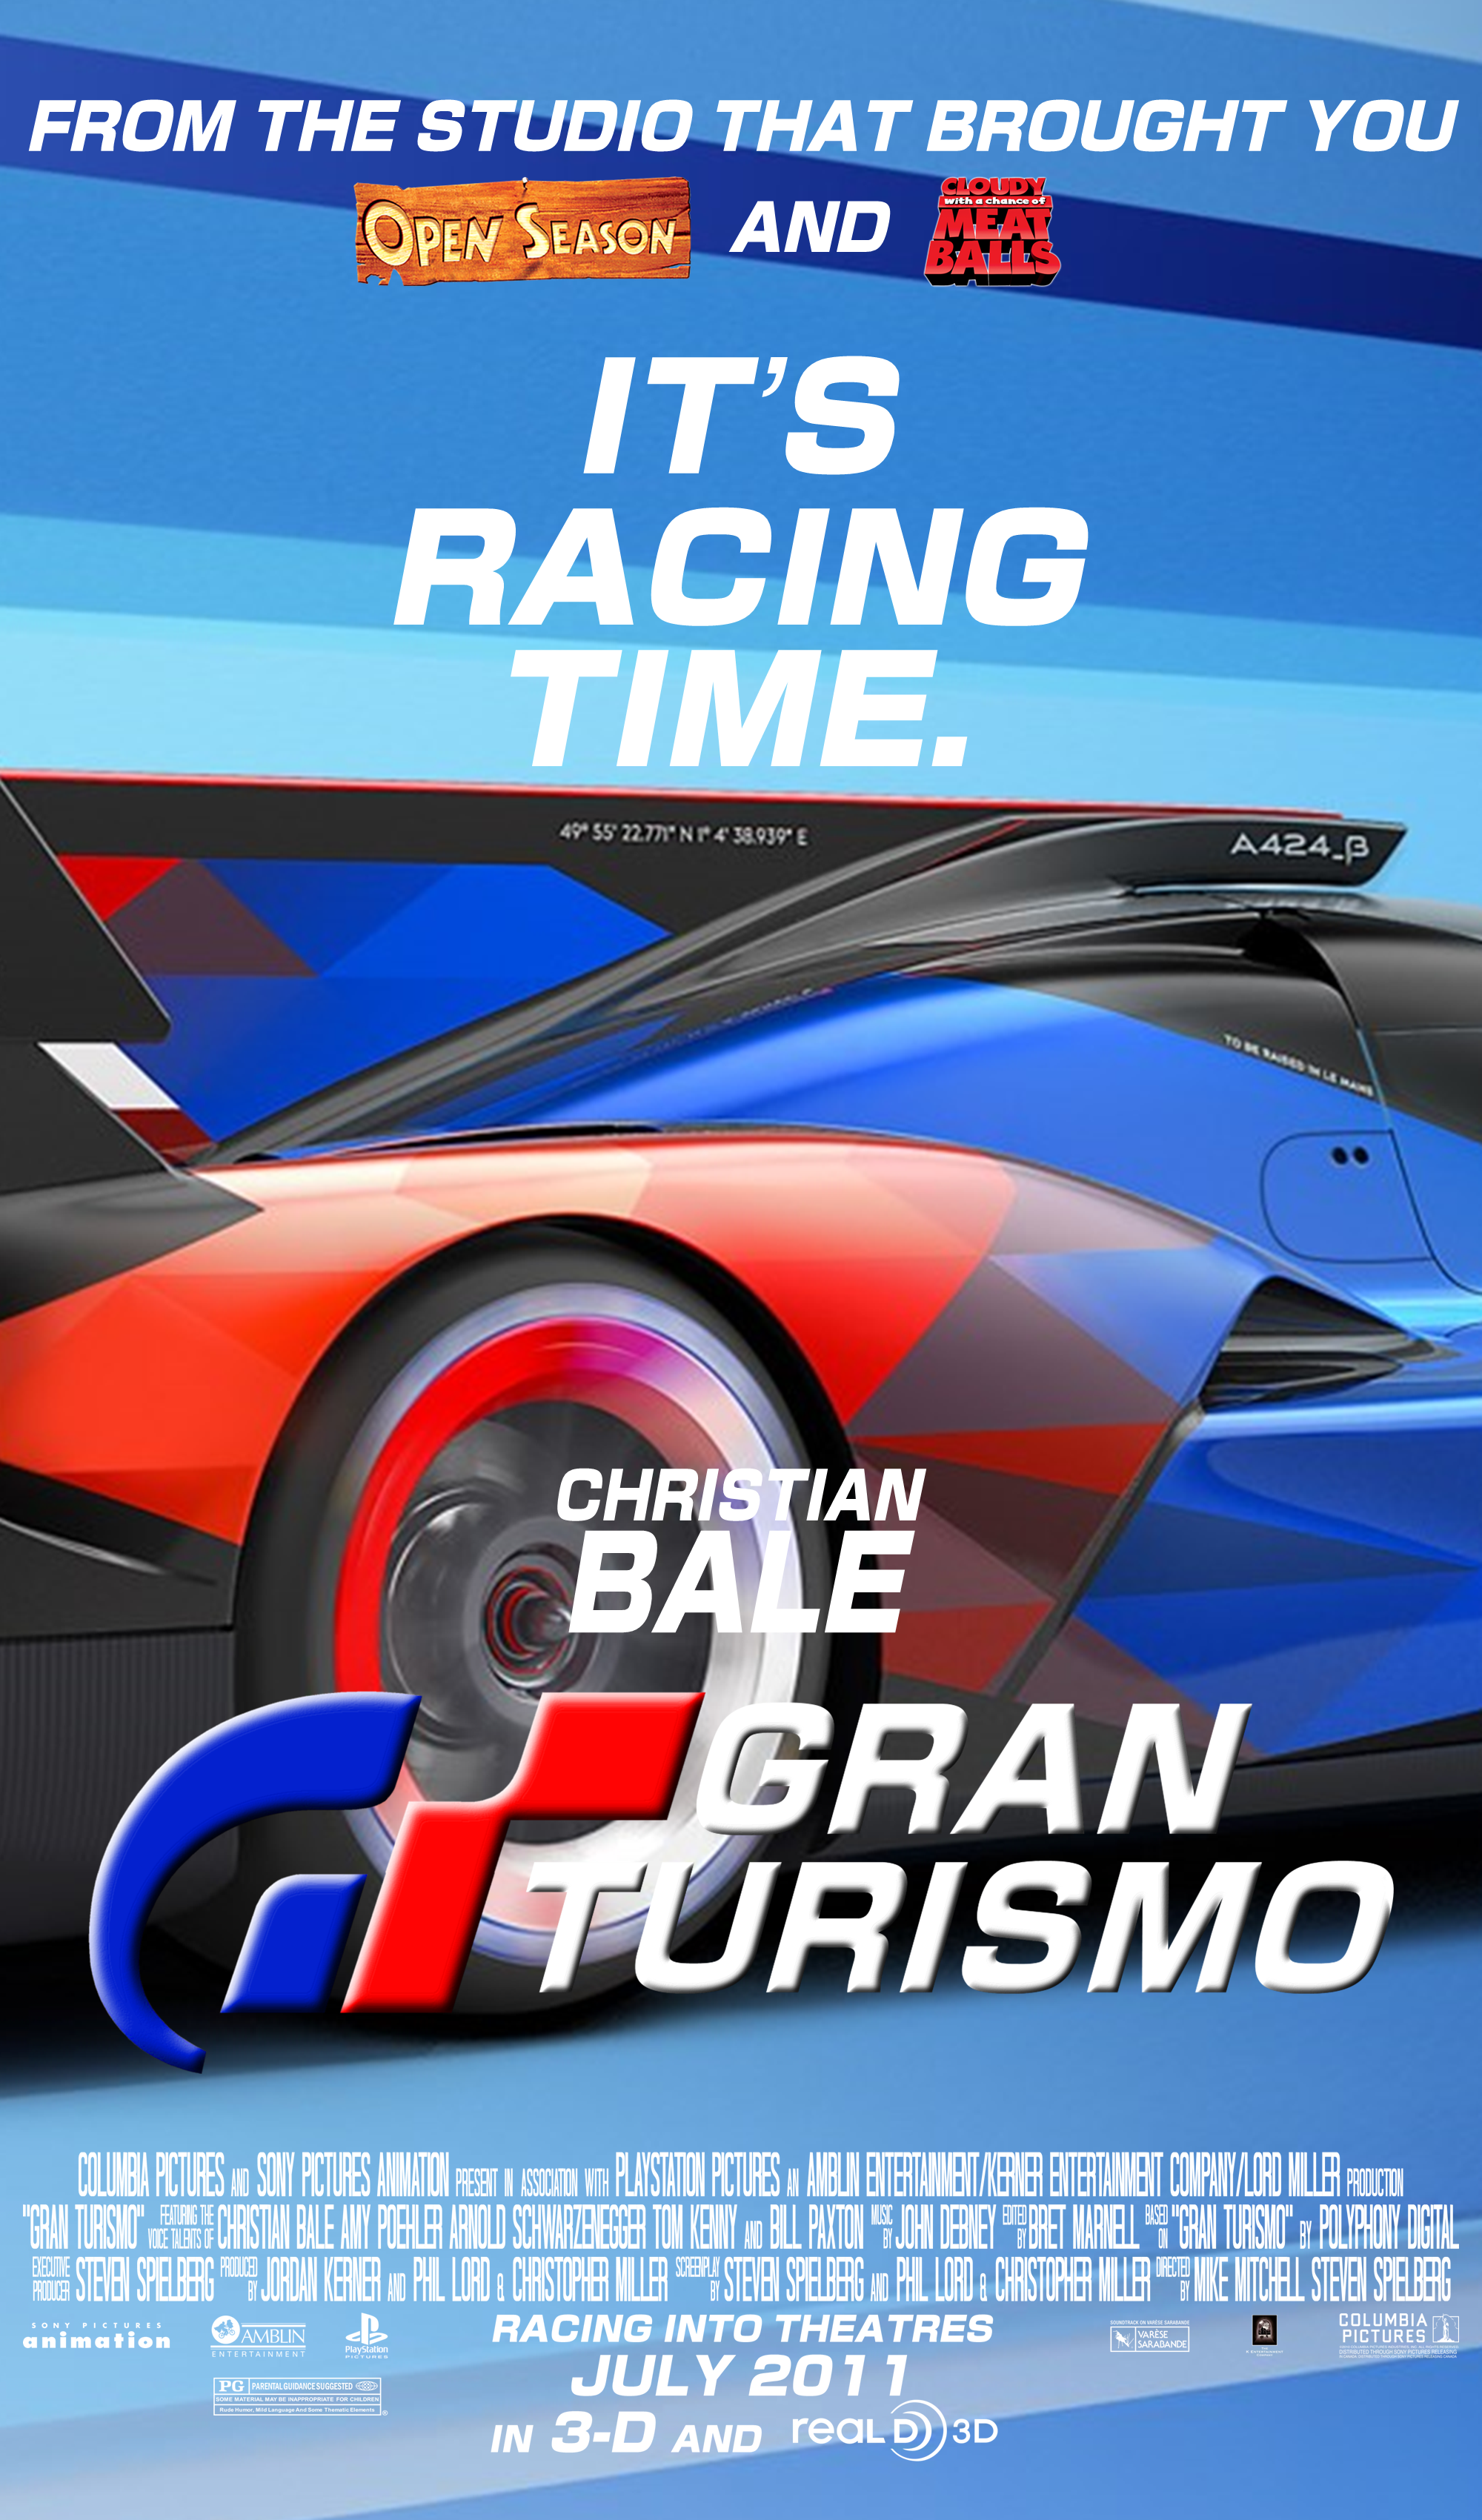 Gran Turismo 5 Prologue - Metacritic